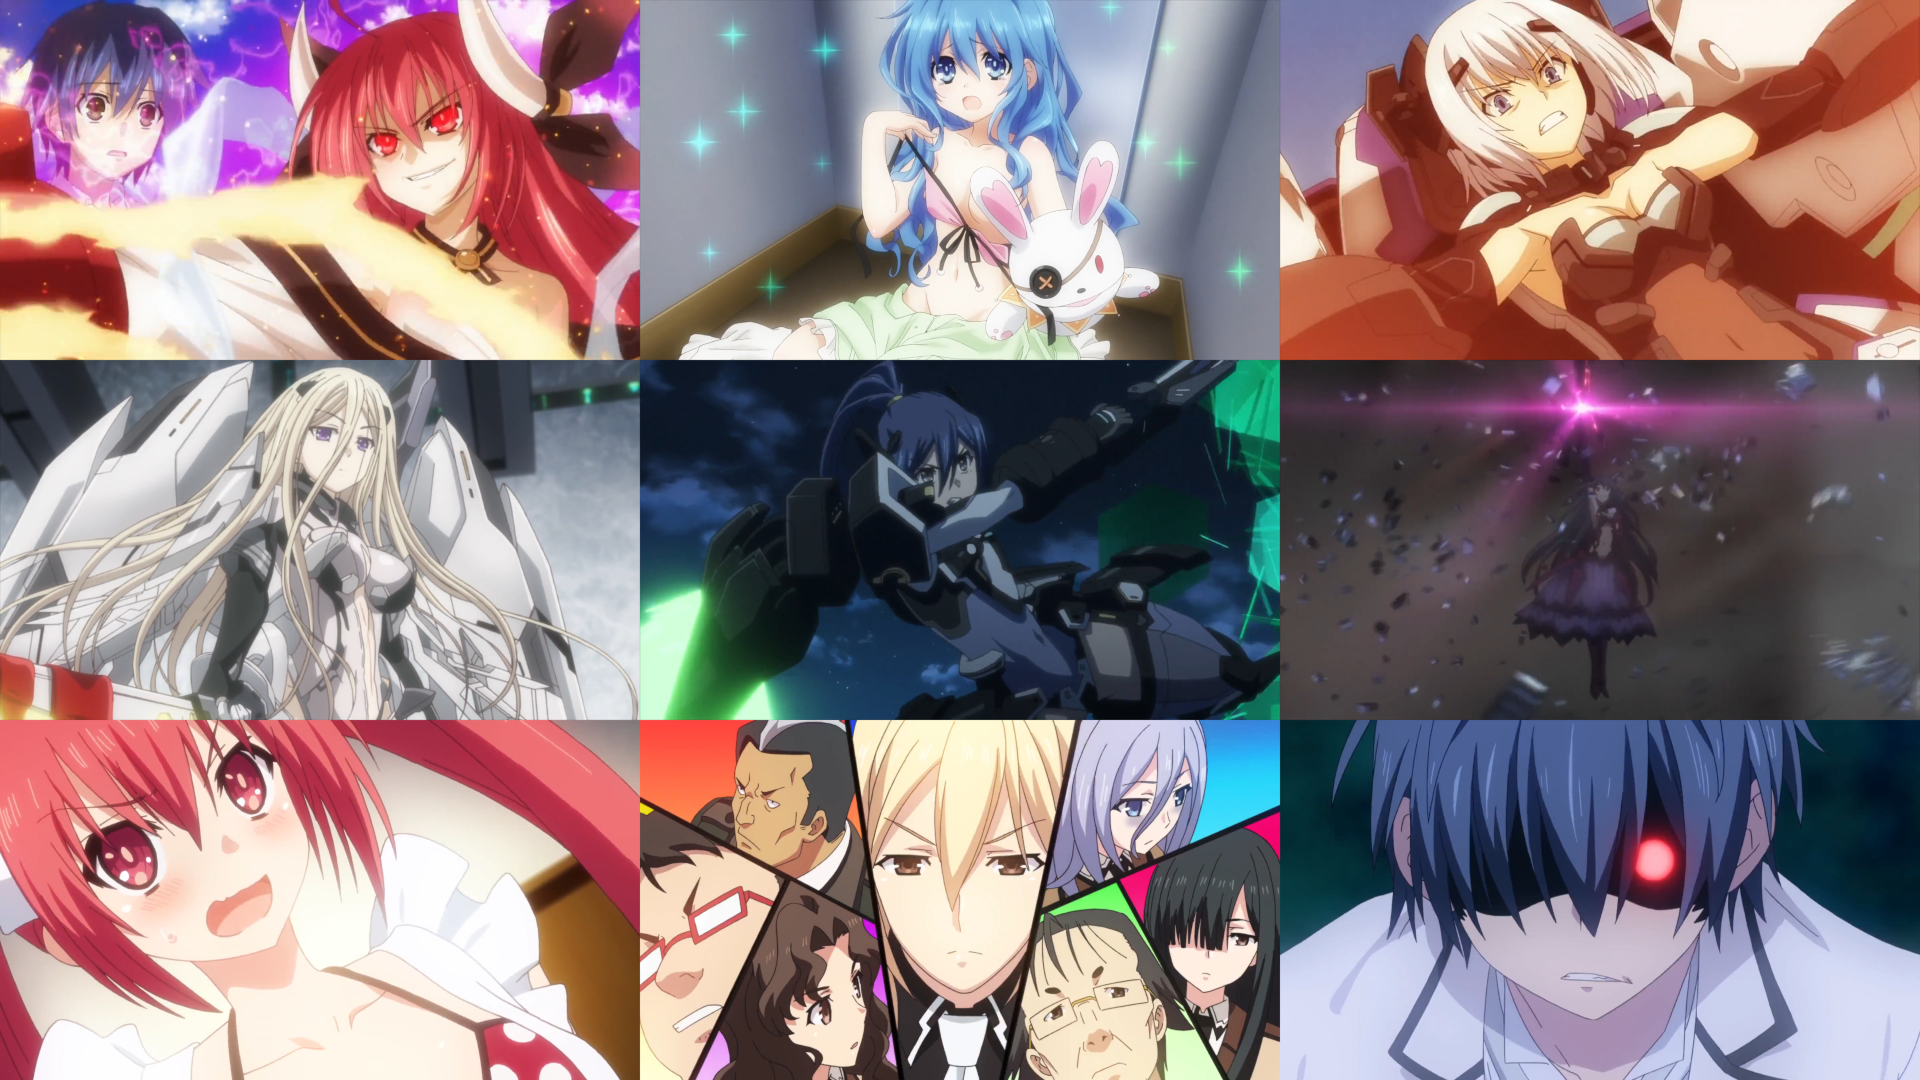 Date a Live Cast Picks Favorite Scenes in Anime So Far